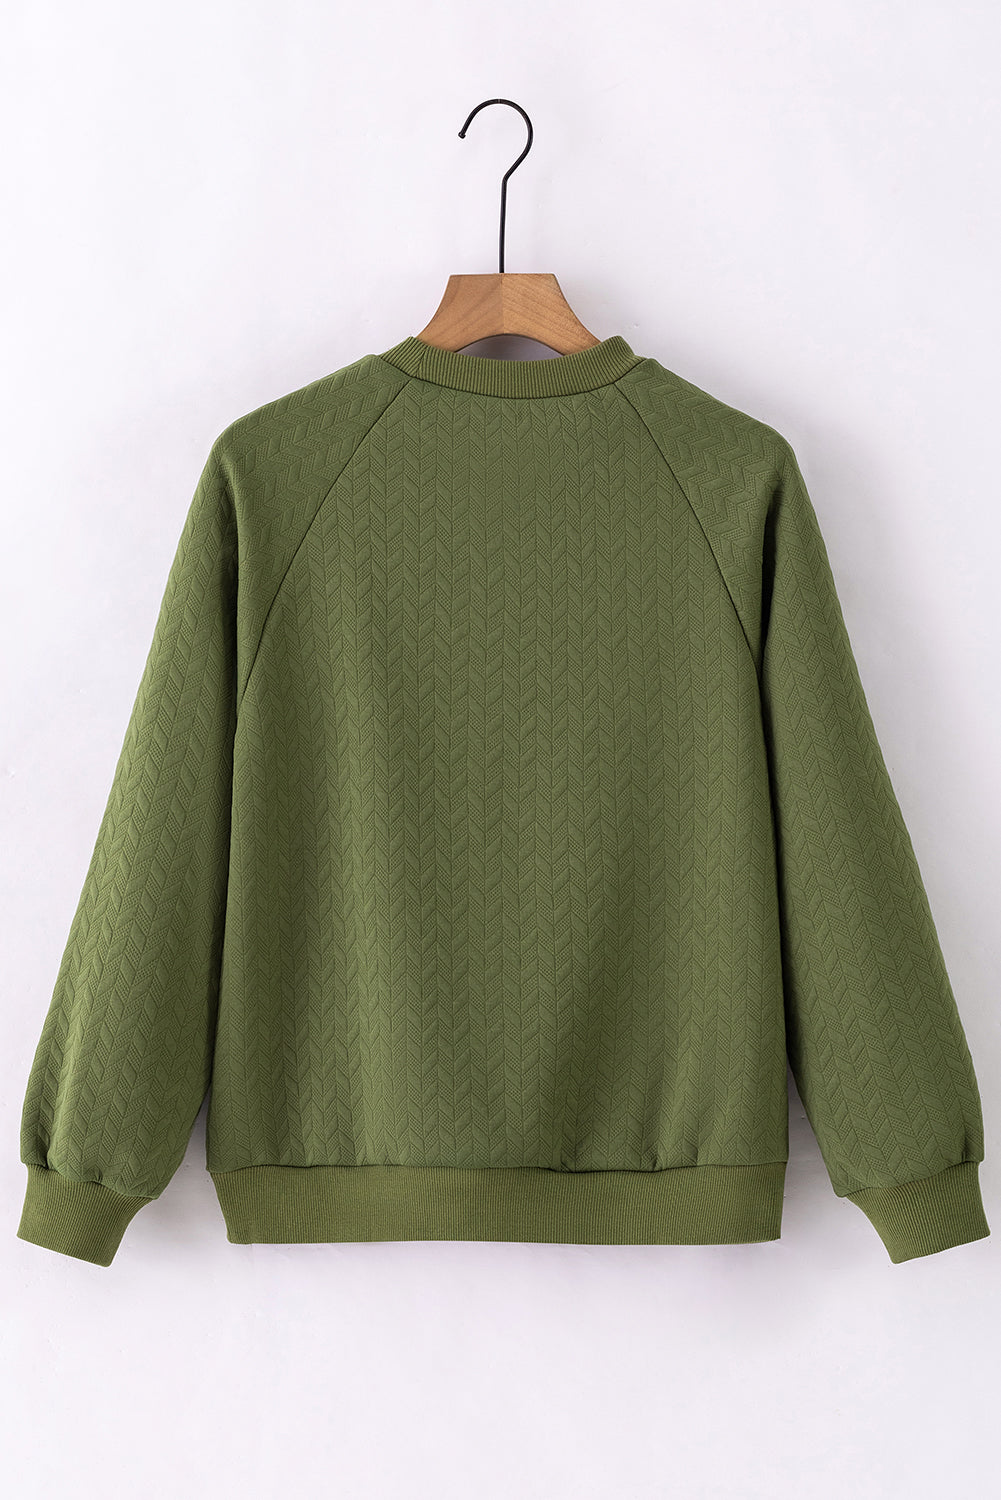 Jungle Green Solid Textured Raglan Sleeve Pullover Sweatshirt - SELFTRITSS